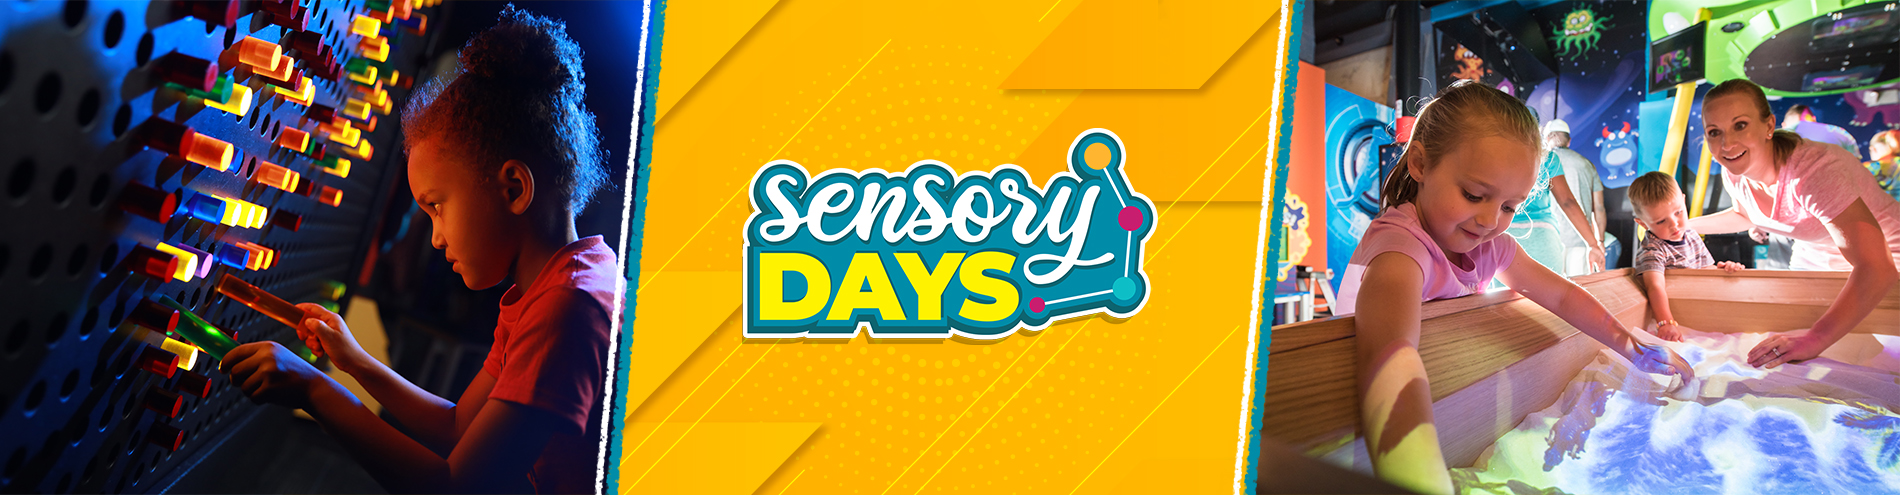 Sensory Days Header